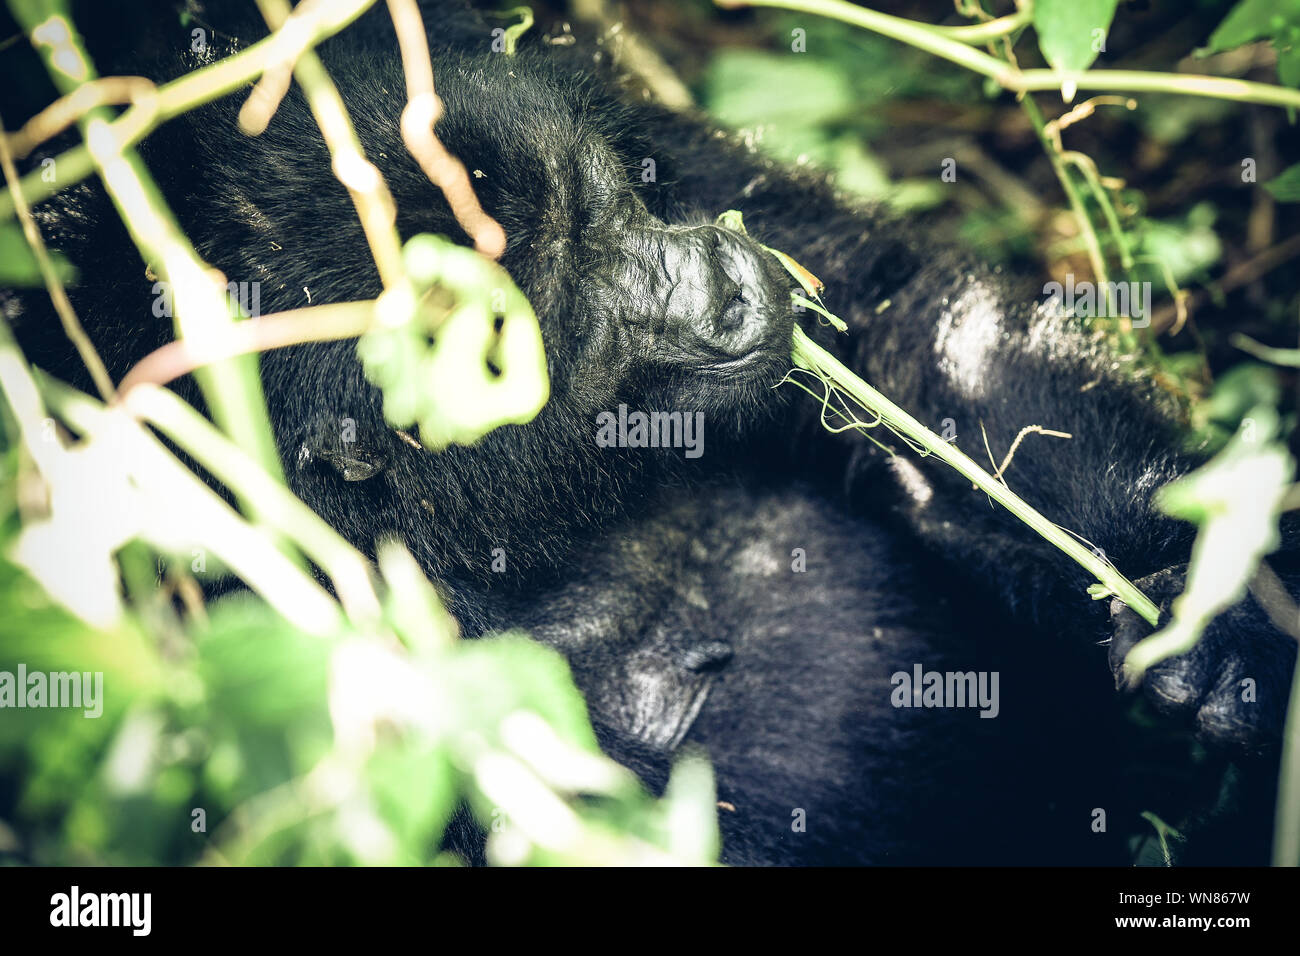 Chimpanzee Eating Amidst Plants Stock Photo